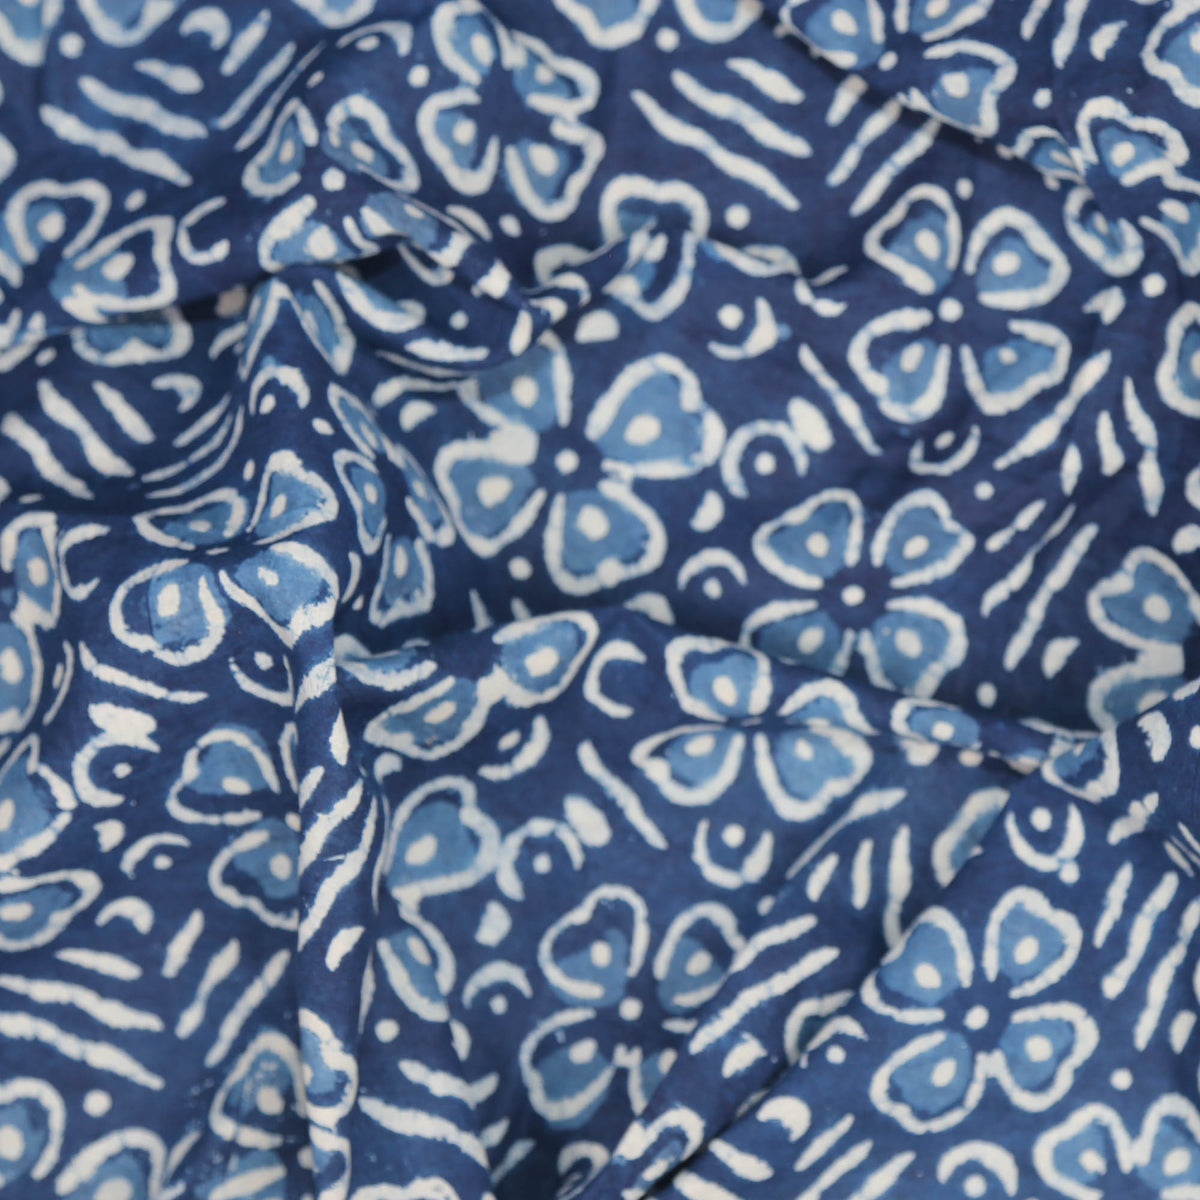 Block Print Fabric - Flowers On Indigo( Design 484)